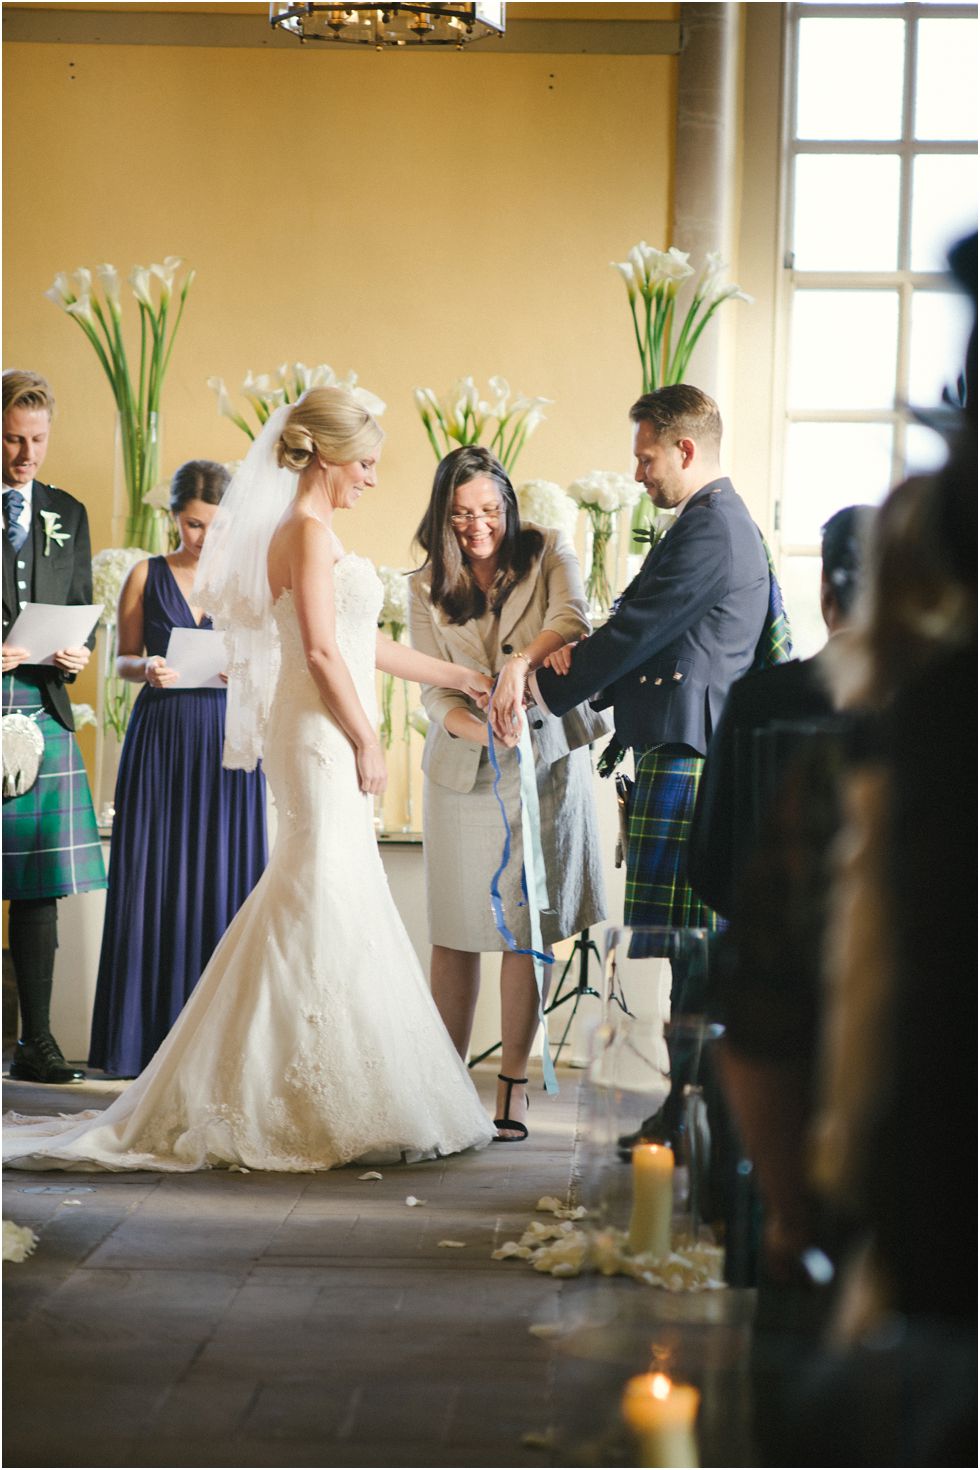 Hopetoun-House-wedding-photography-Edinburgh-34.jpg